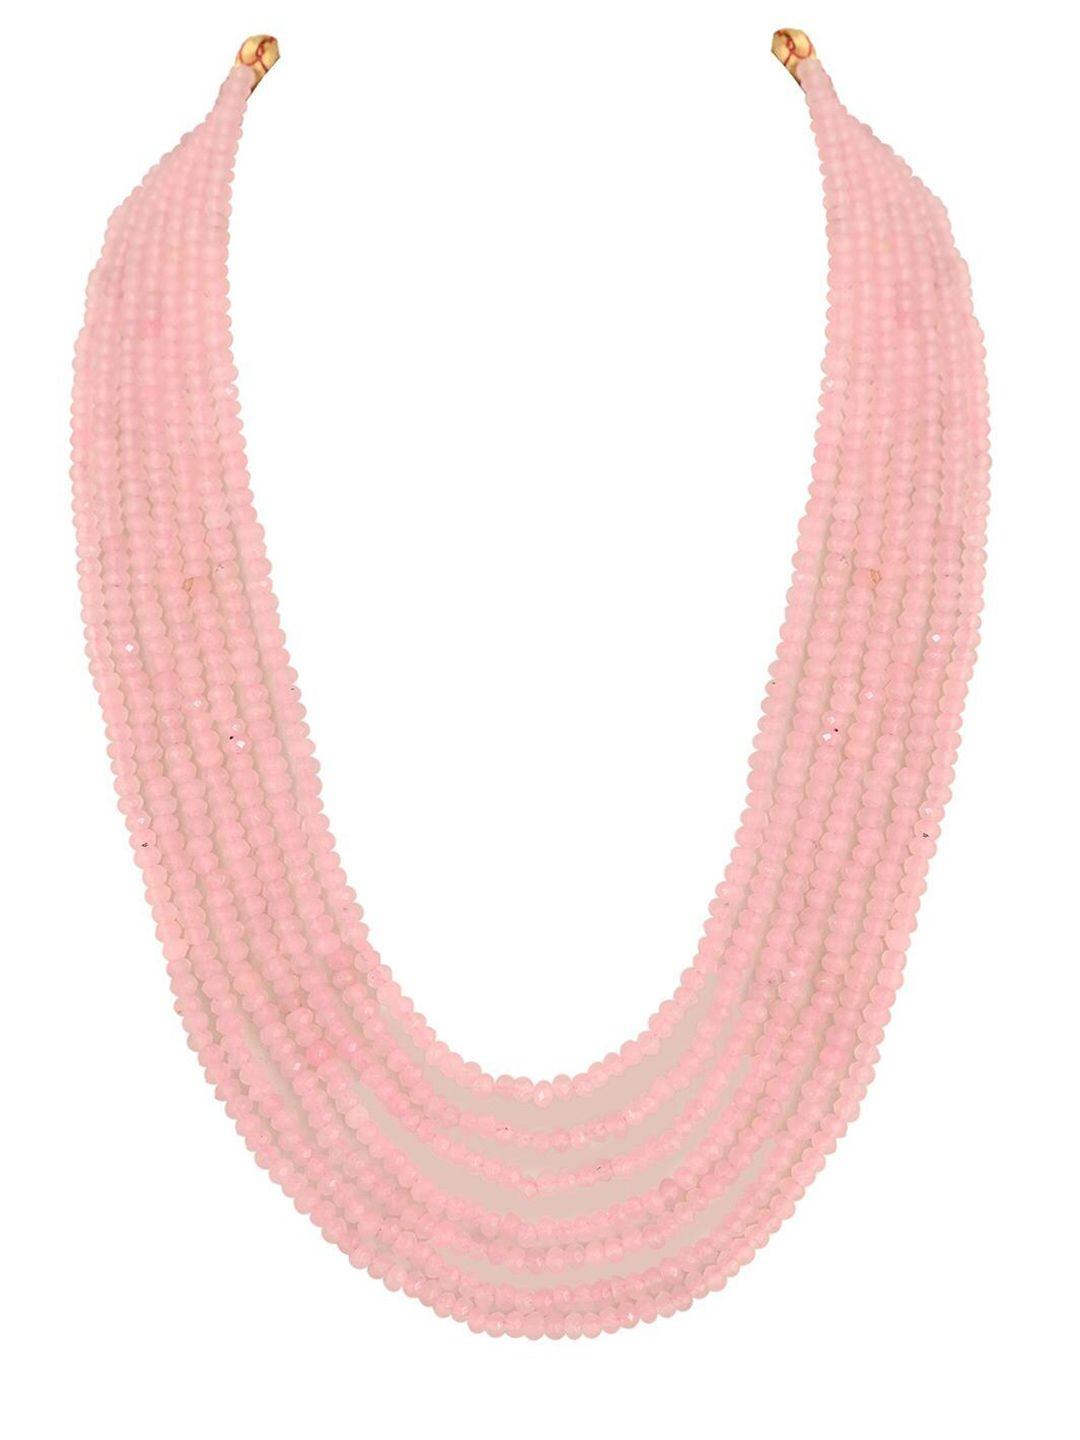 ratnavali jewels beaded layered necklace